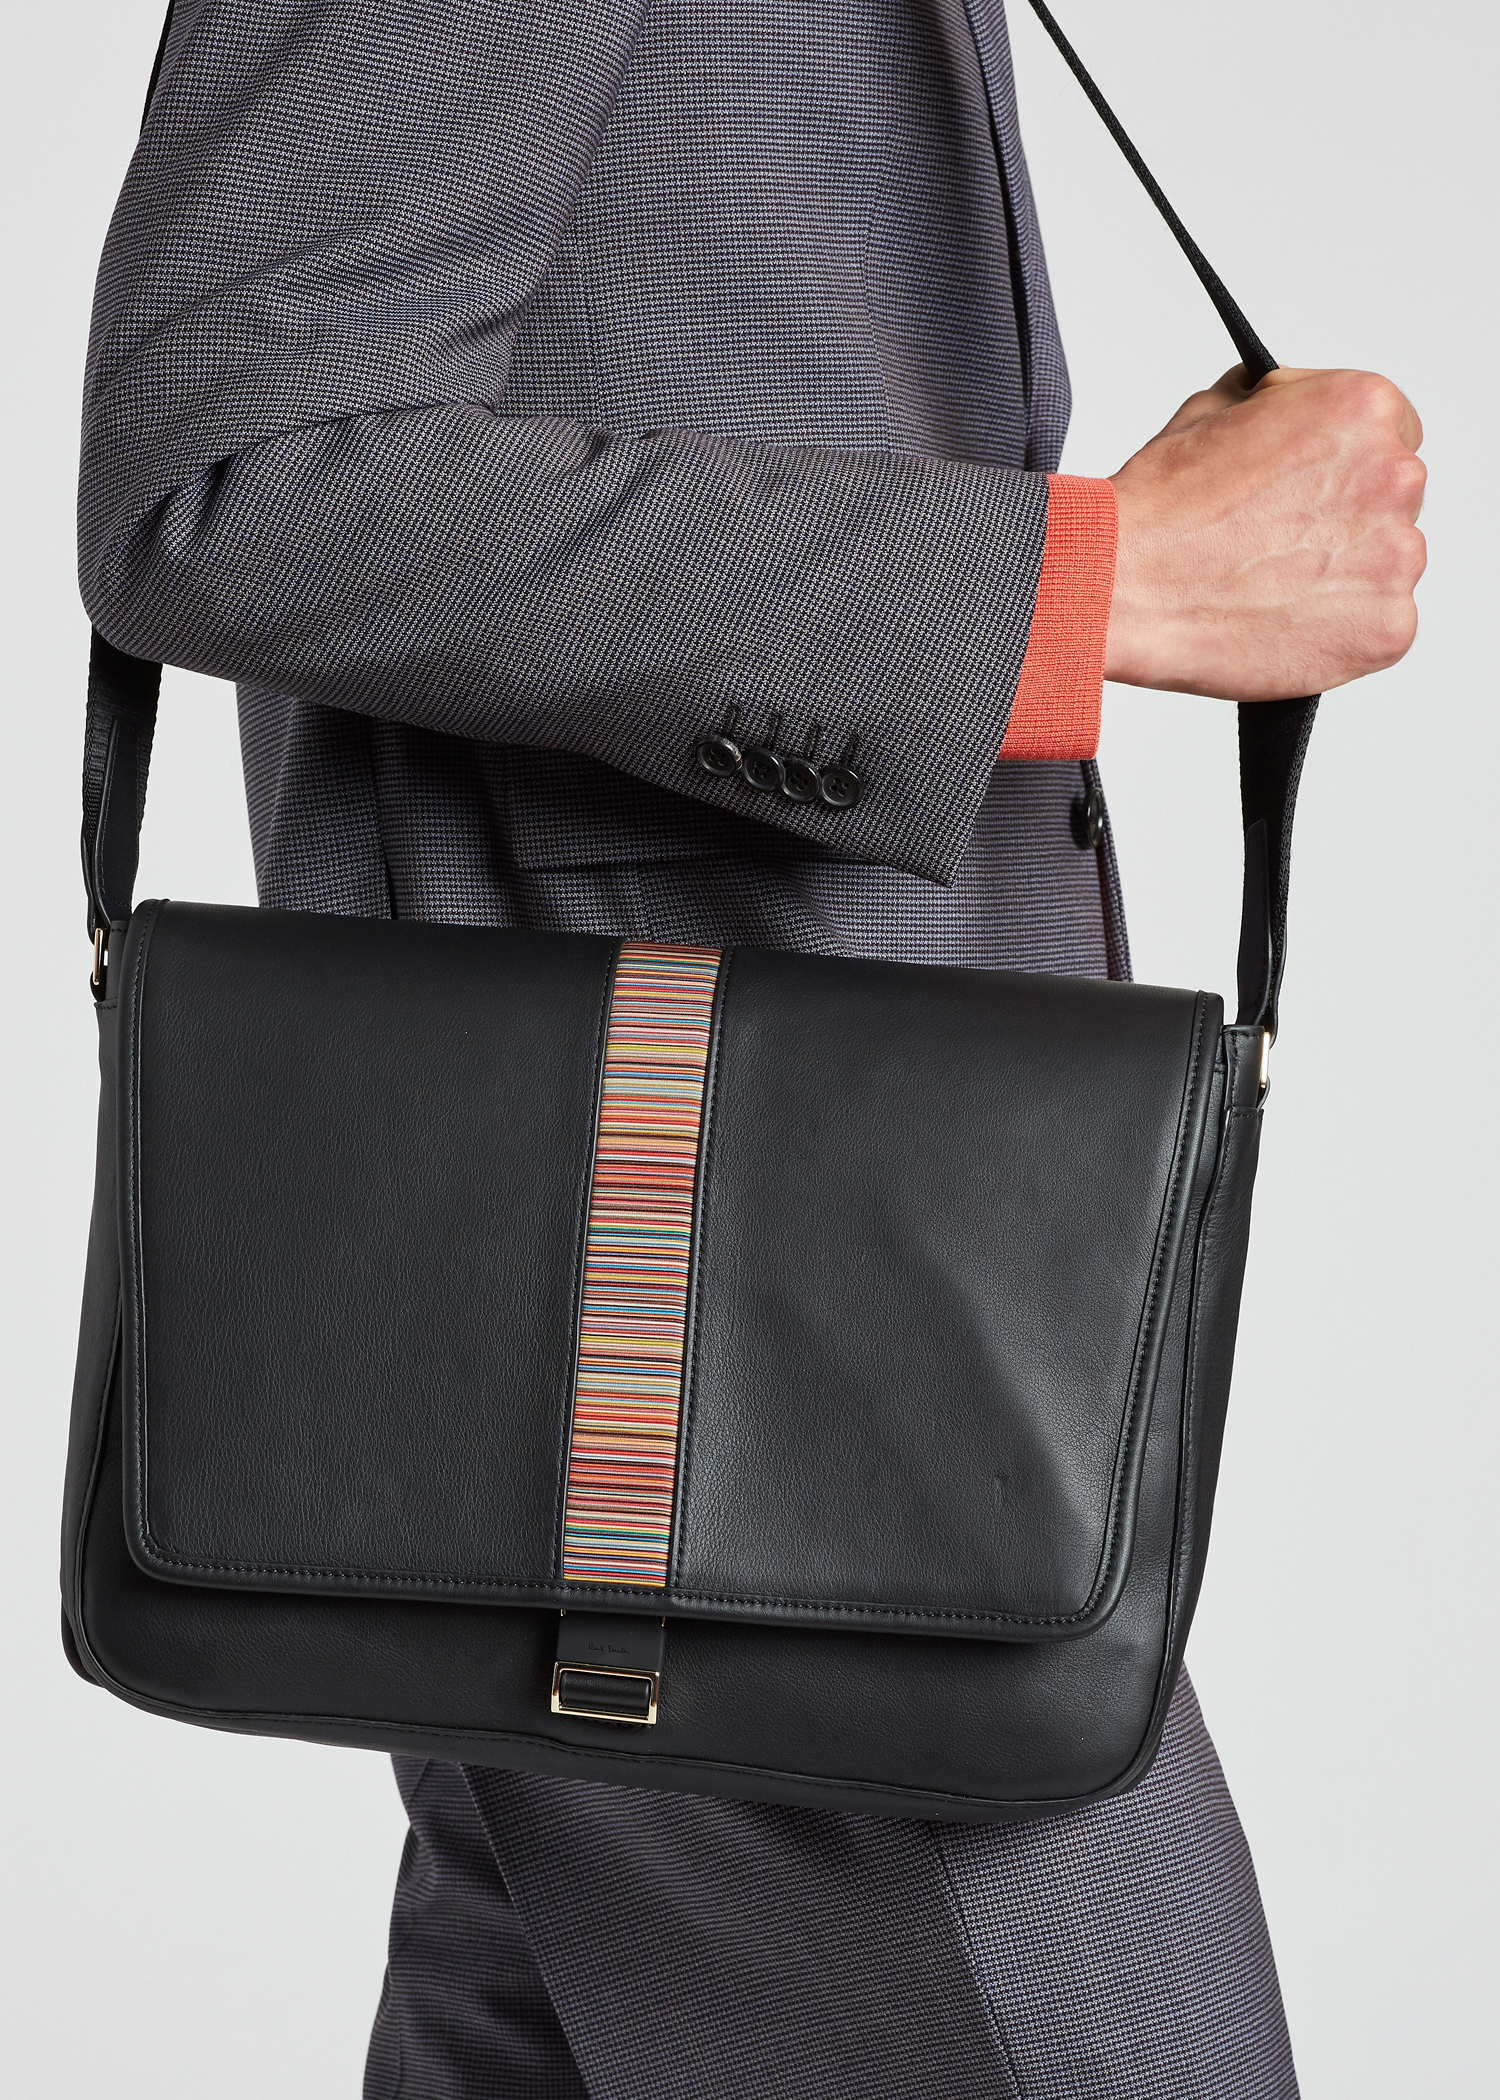 Model view - Black 'Signature Stripe' Messenger Bag Paul Smith